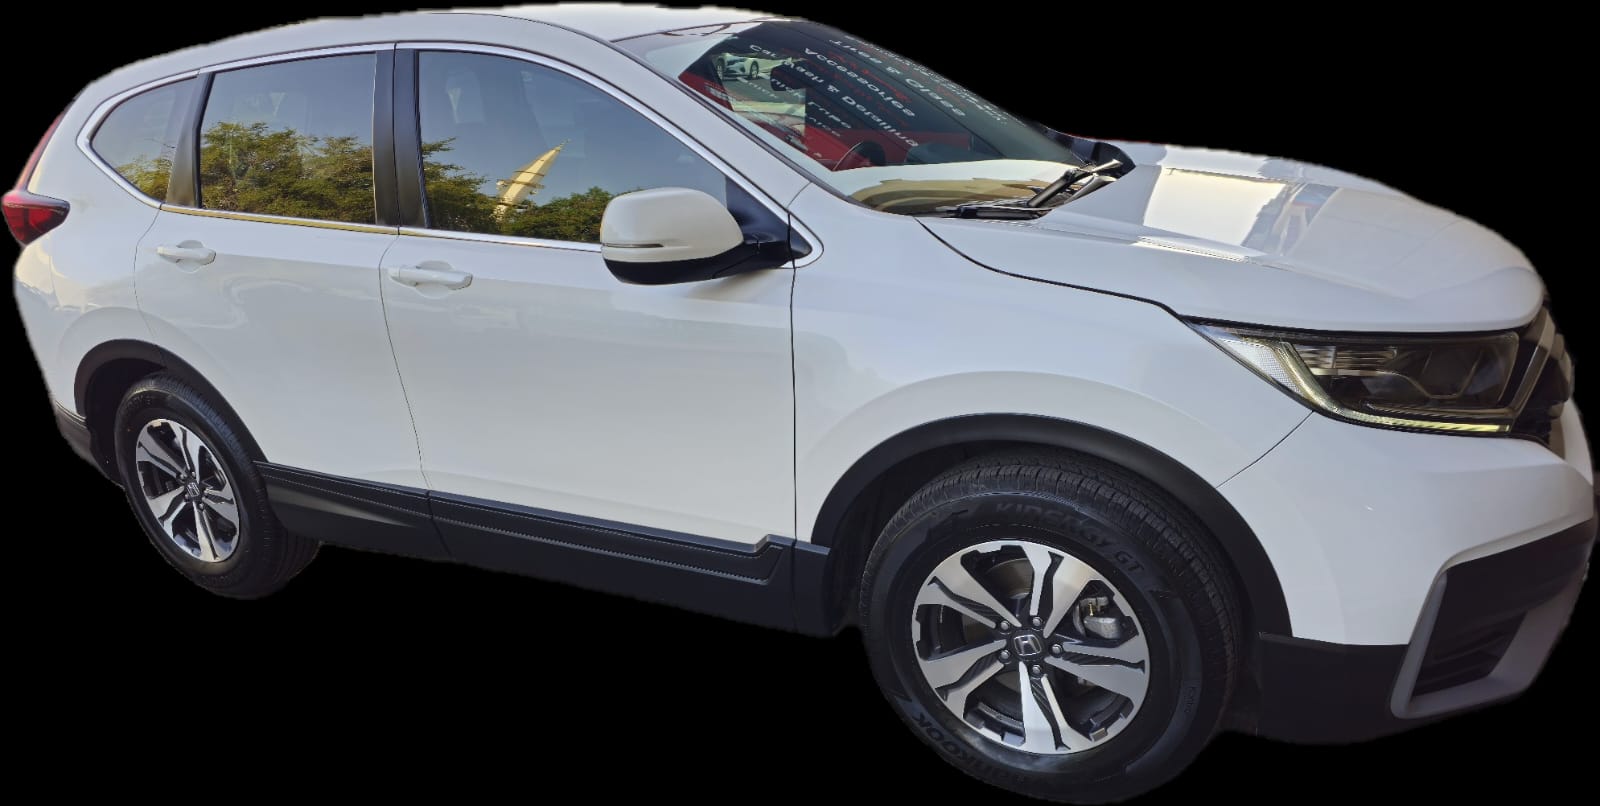 Model year 2022 Honda CRV-DX,2WD,2.4L, 4 Cylinder, Platinum White colour for sale